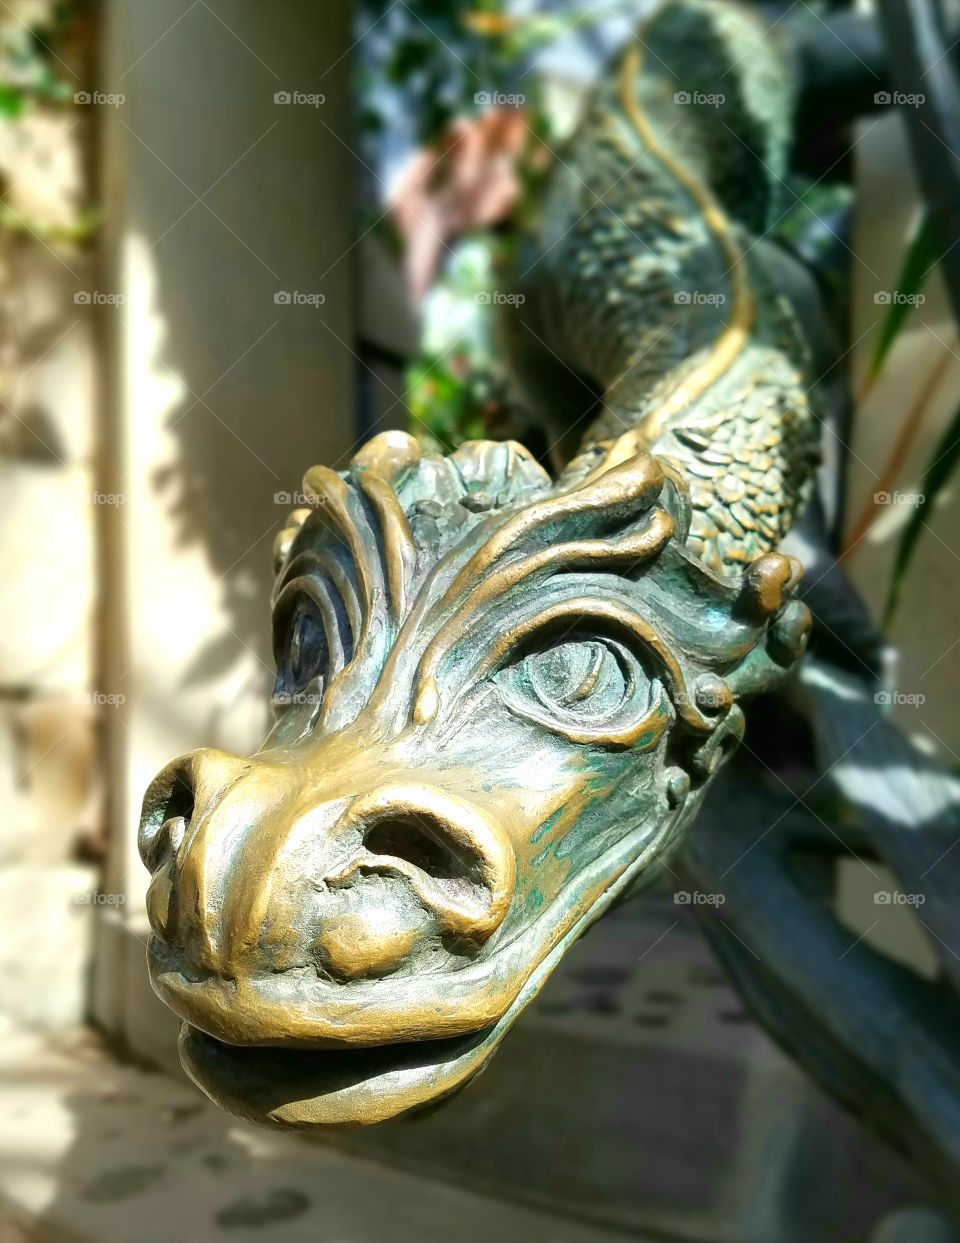 close-up of dragon head stair railing, copper/bronze sculpture